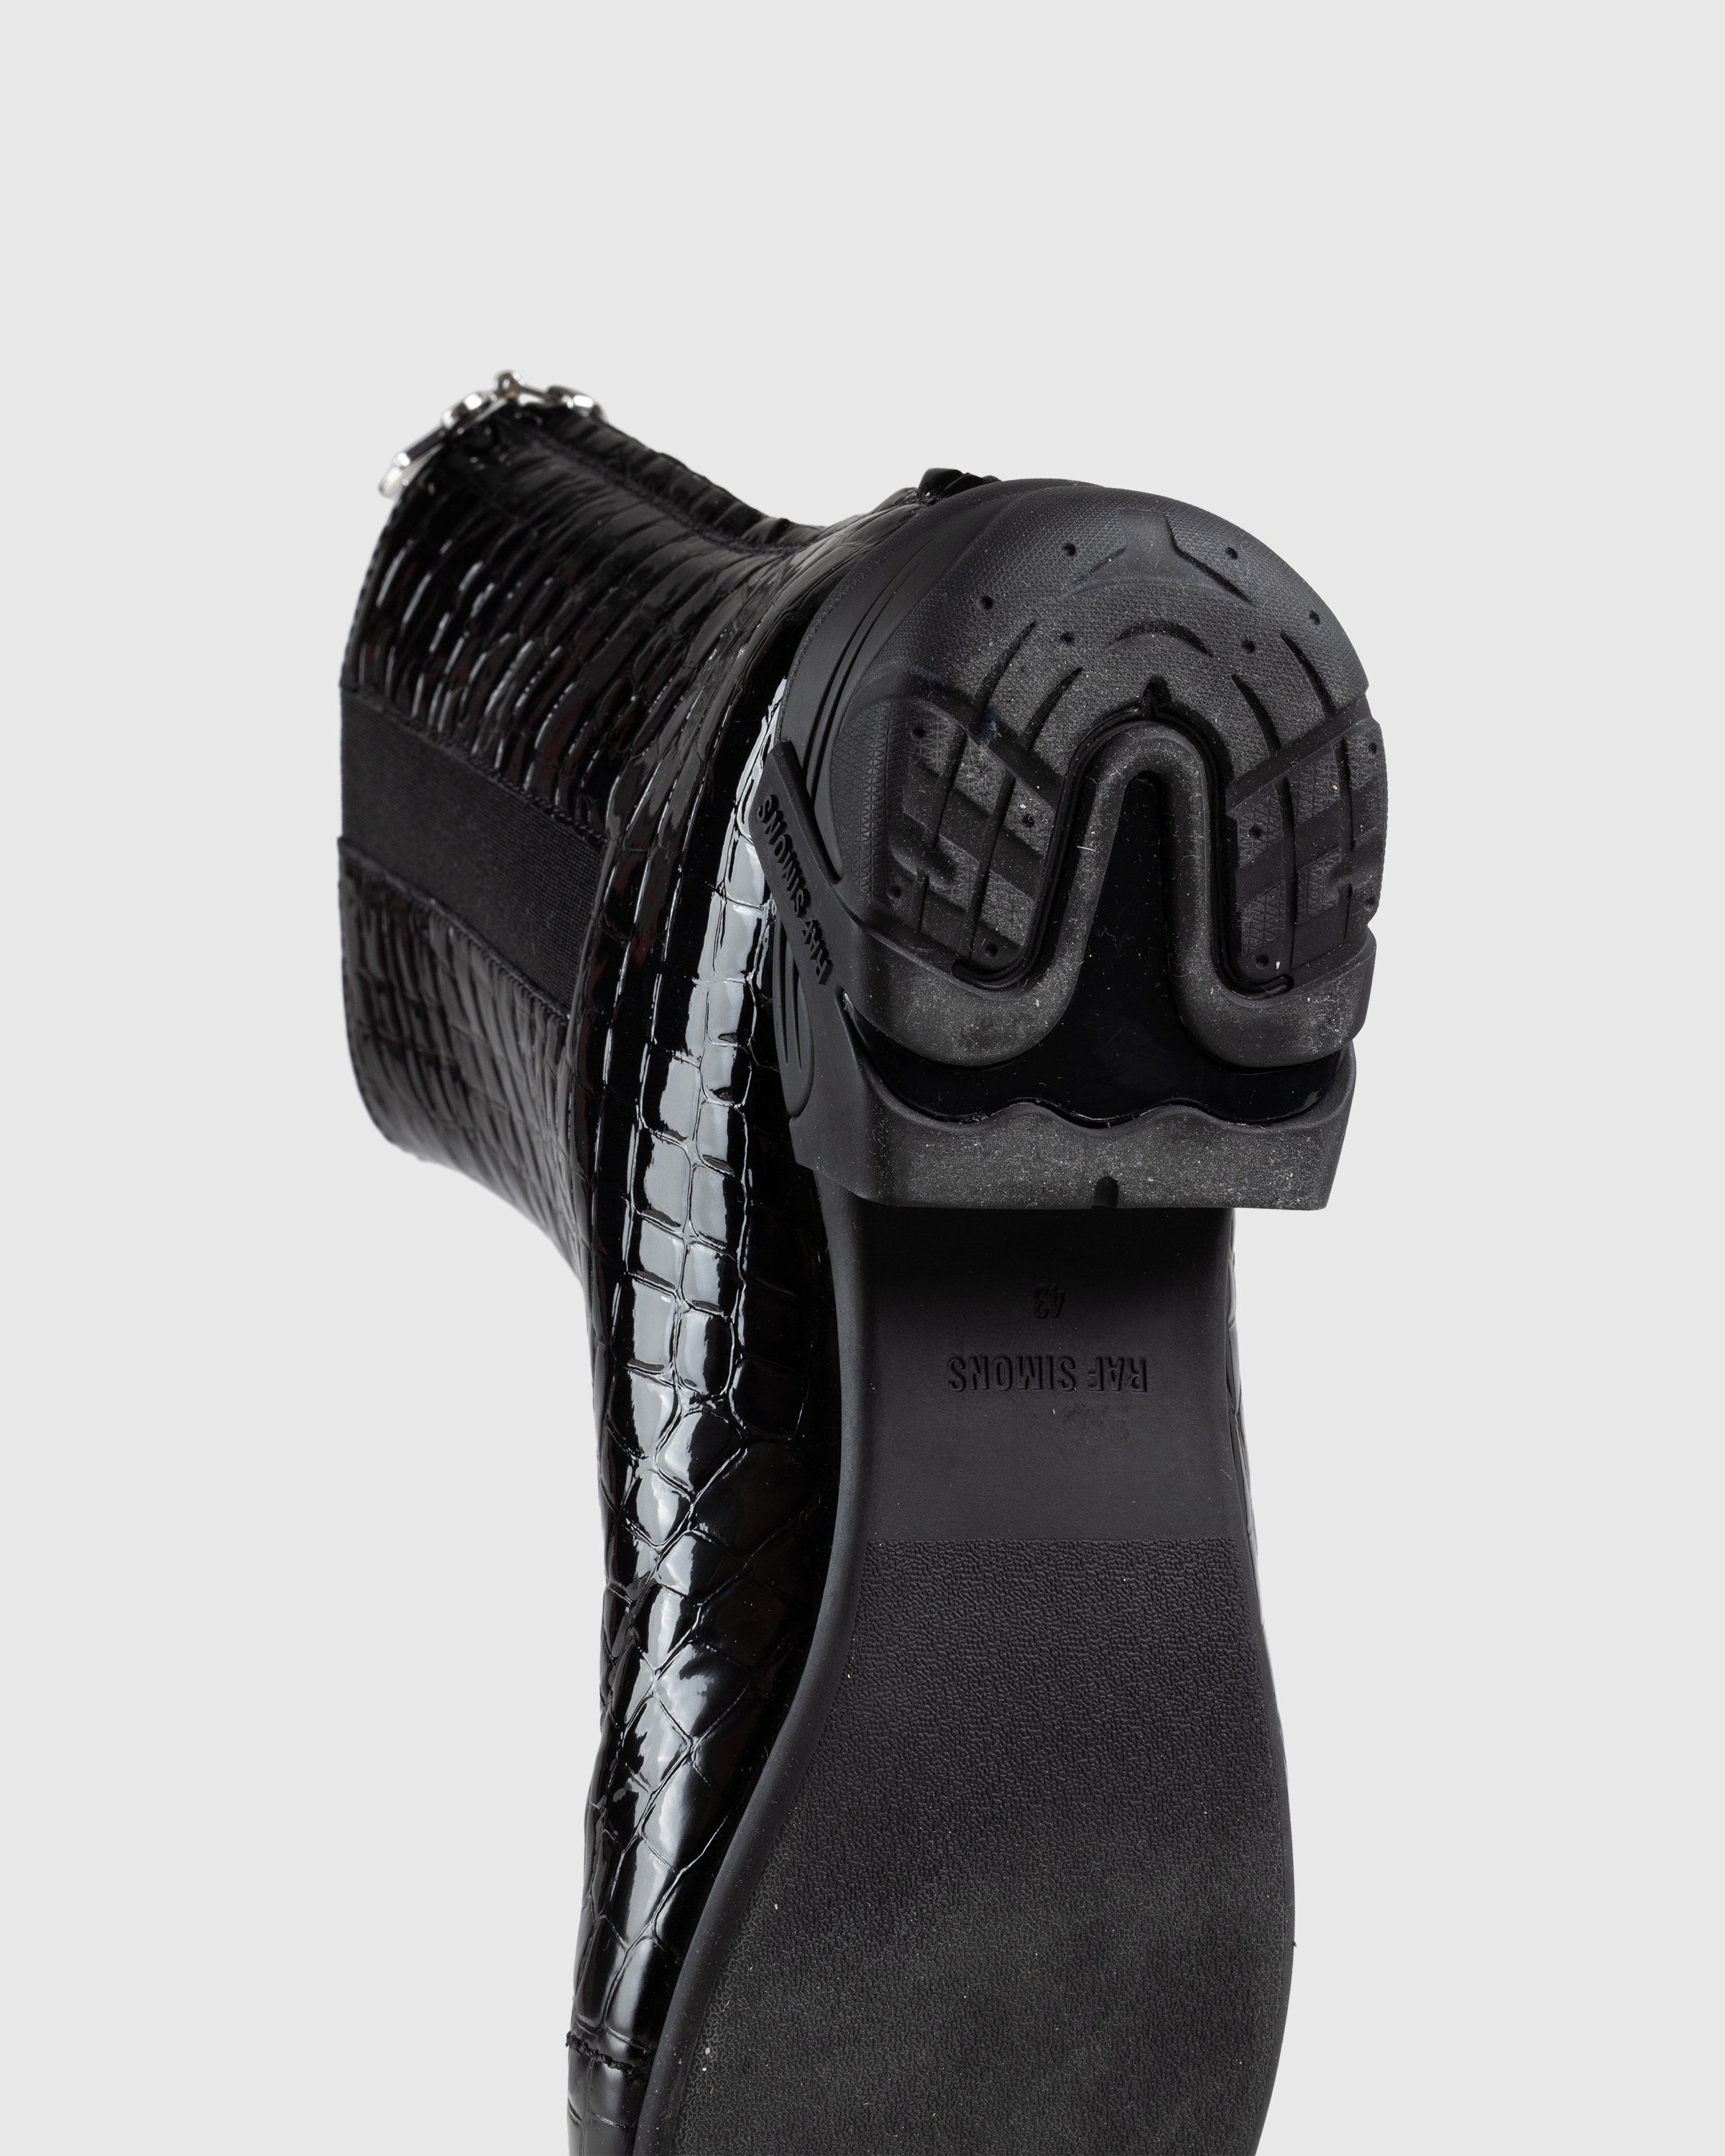 Raf Simons - Solaris High Leather Boot Black Croc - Footwear - Black - Image 6